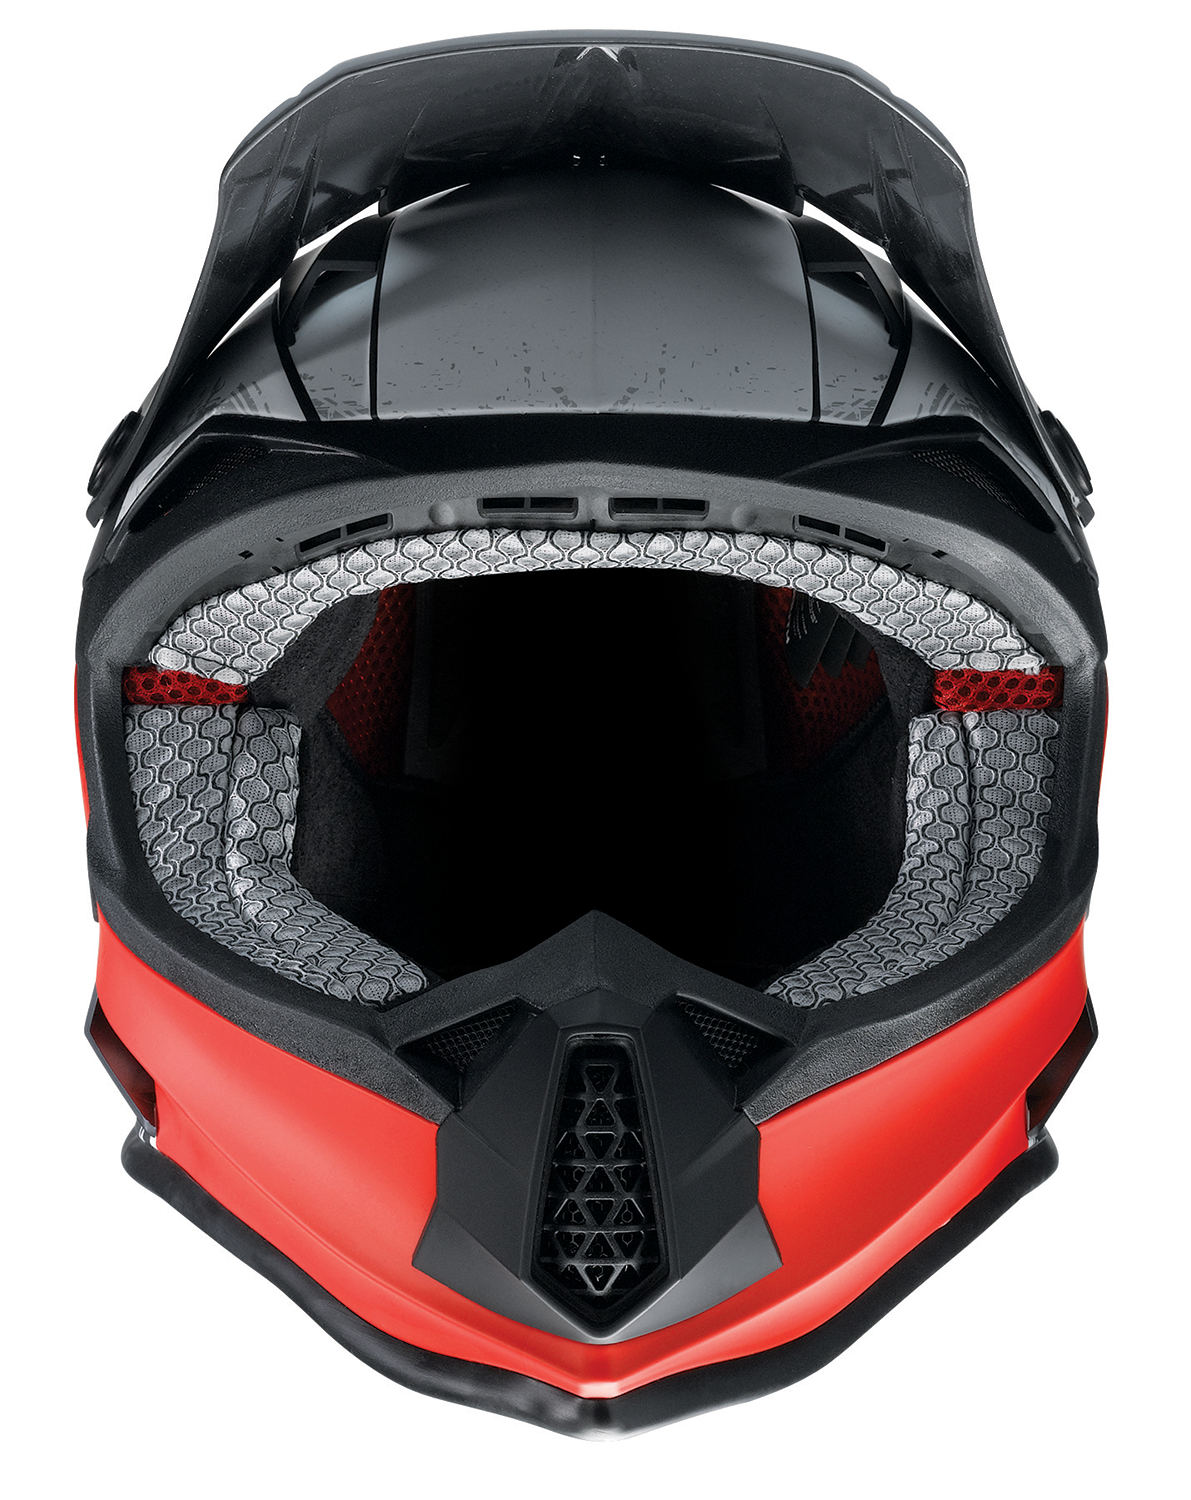 Z1R Youth F.I. Helmet - Fractal - MIPS? - Matte Black/Red - Small 0111-1517